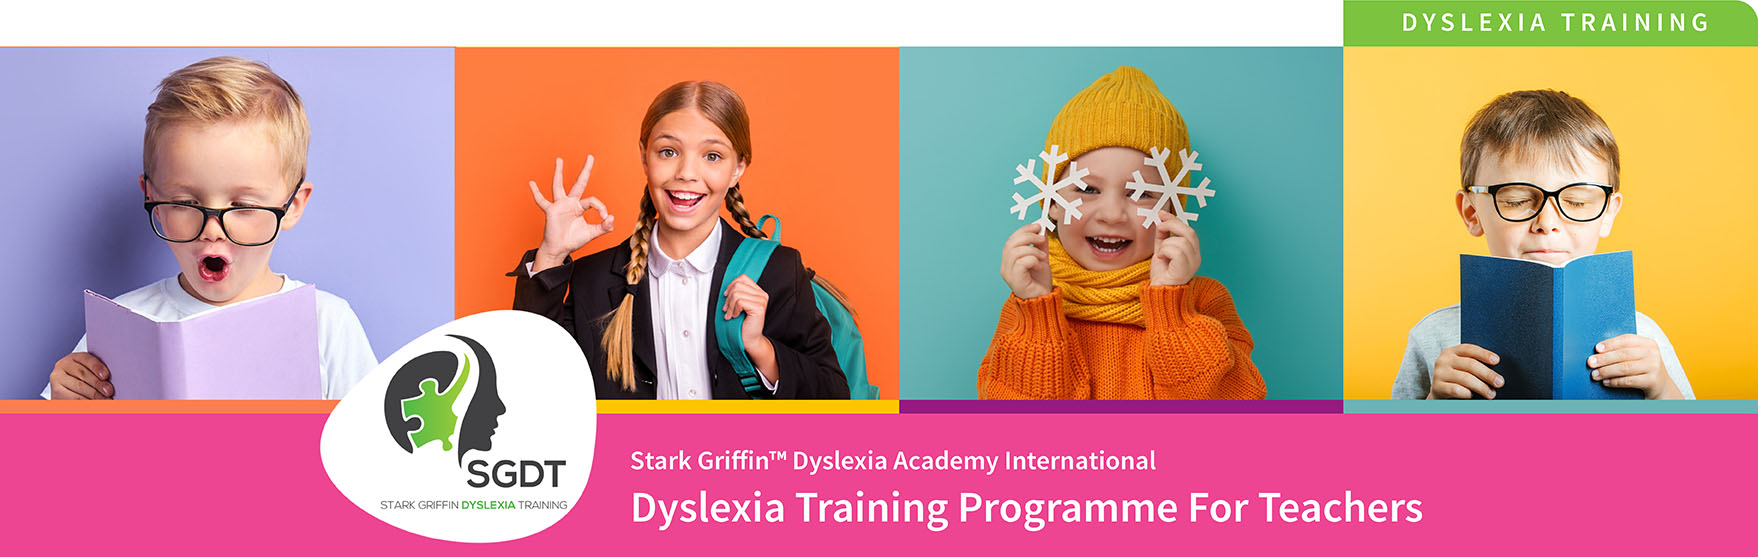 dyslexia therapy course for teachers